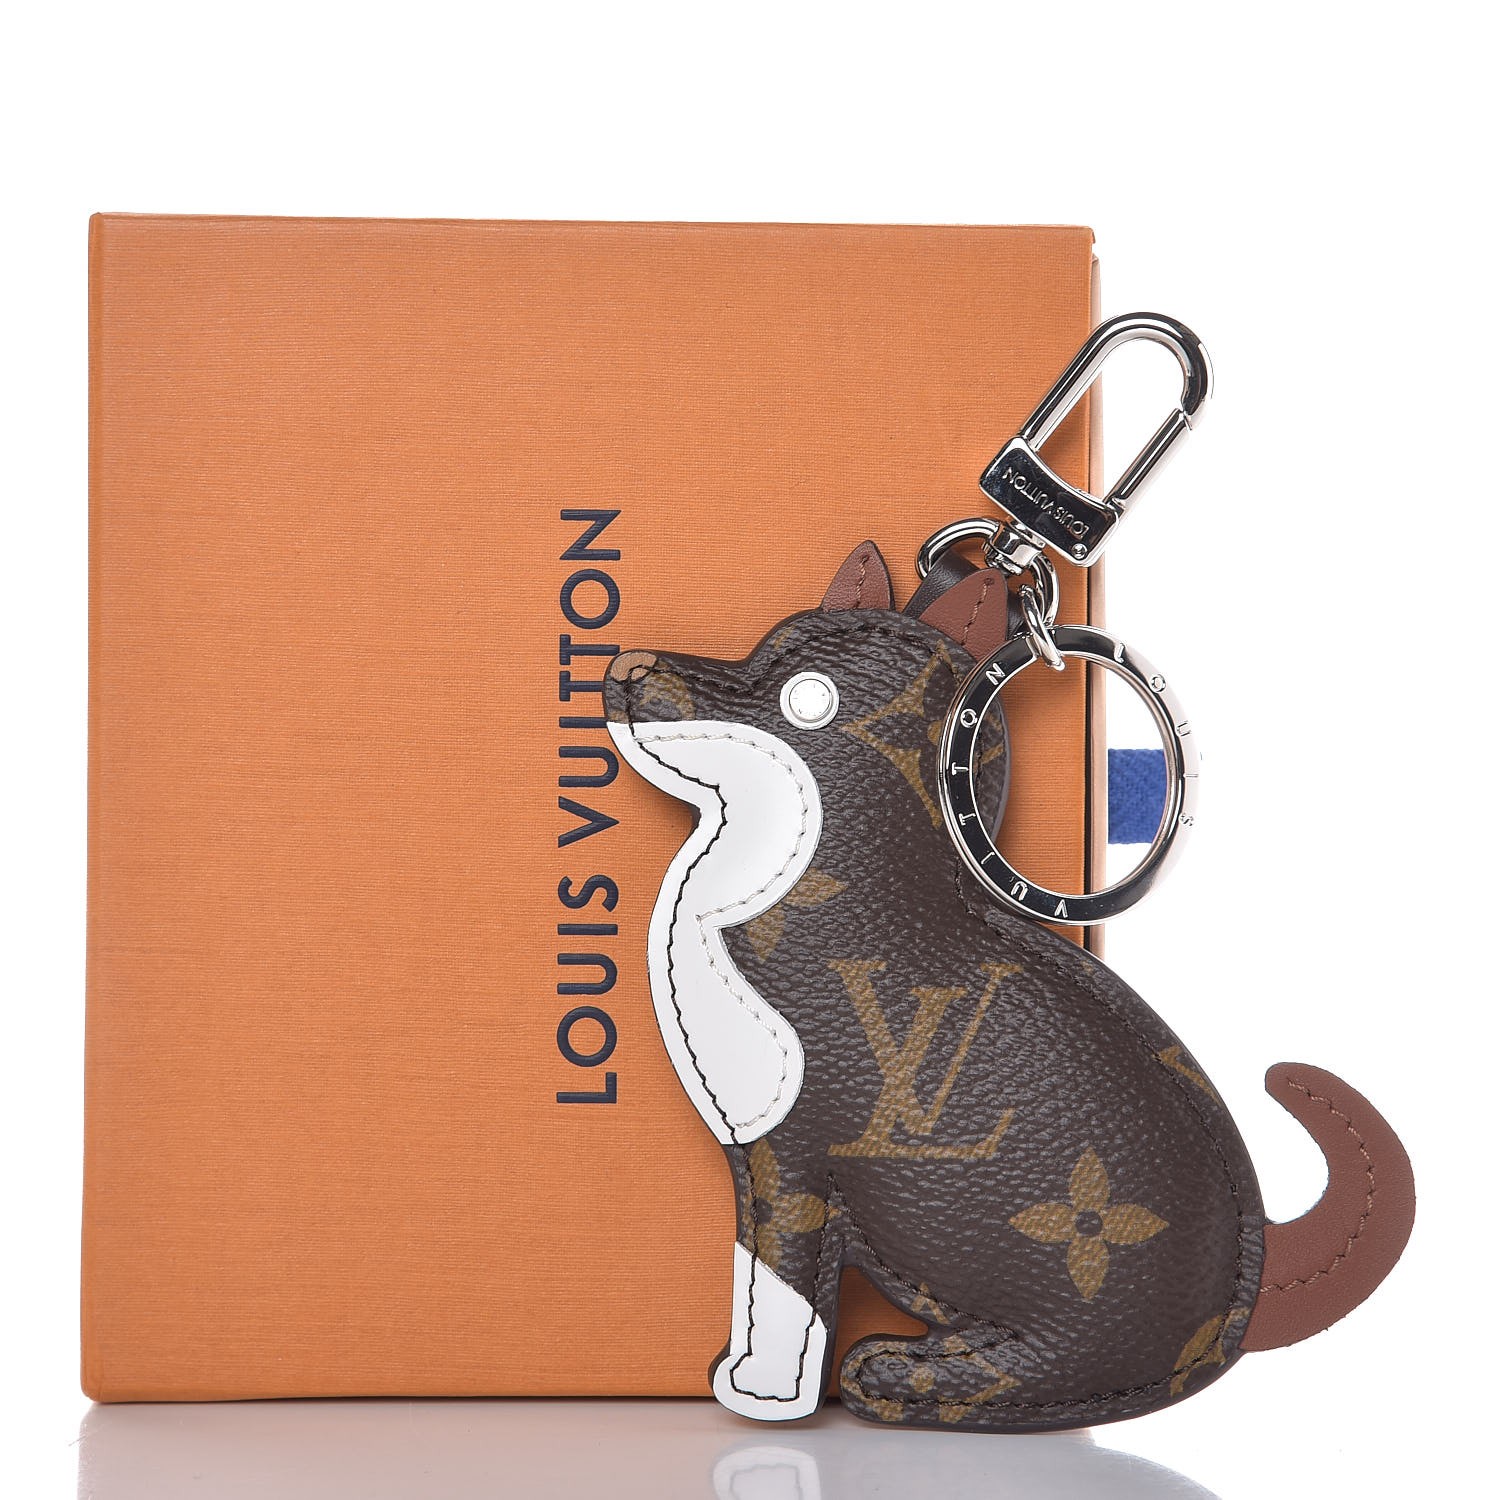 Dog Bag Charm Louis Vuitton  Natural Resource Department